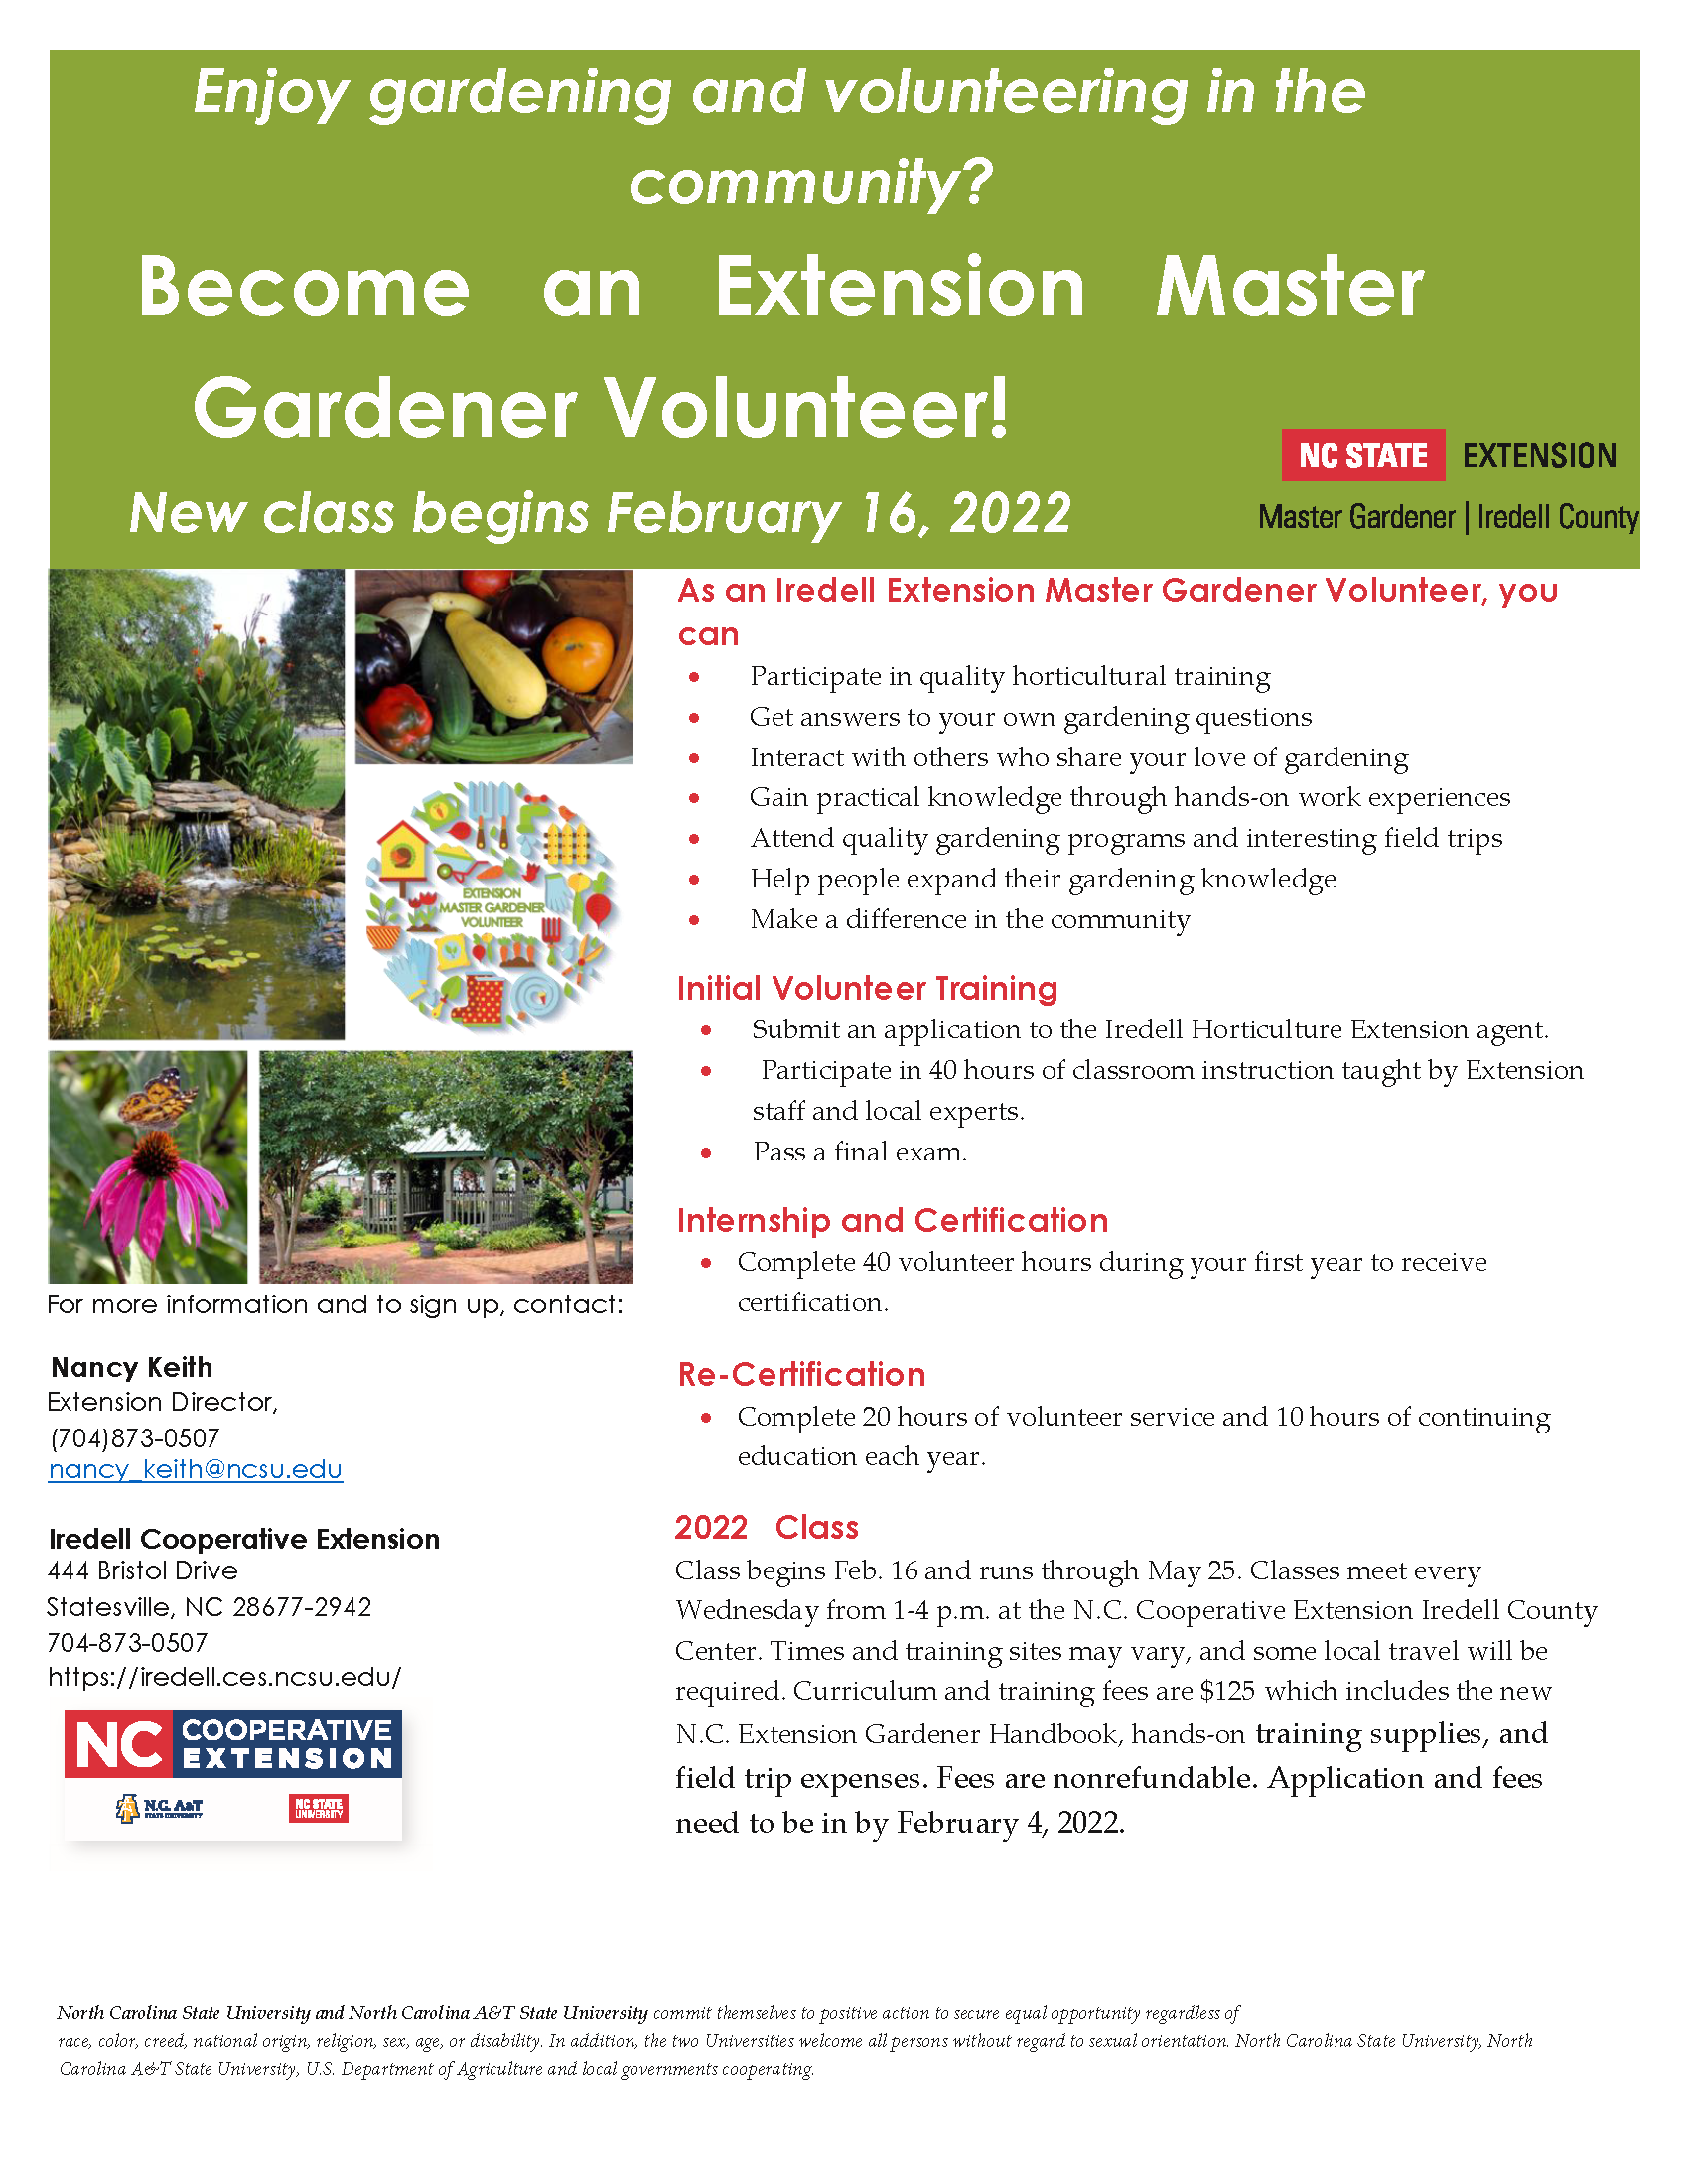 This the program flyer advertising the Extension Master Gardener Class 